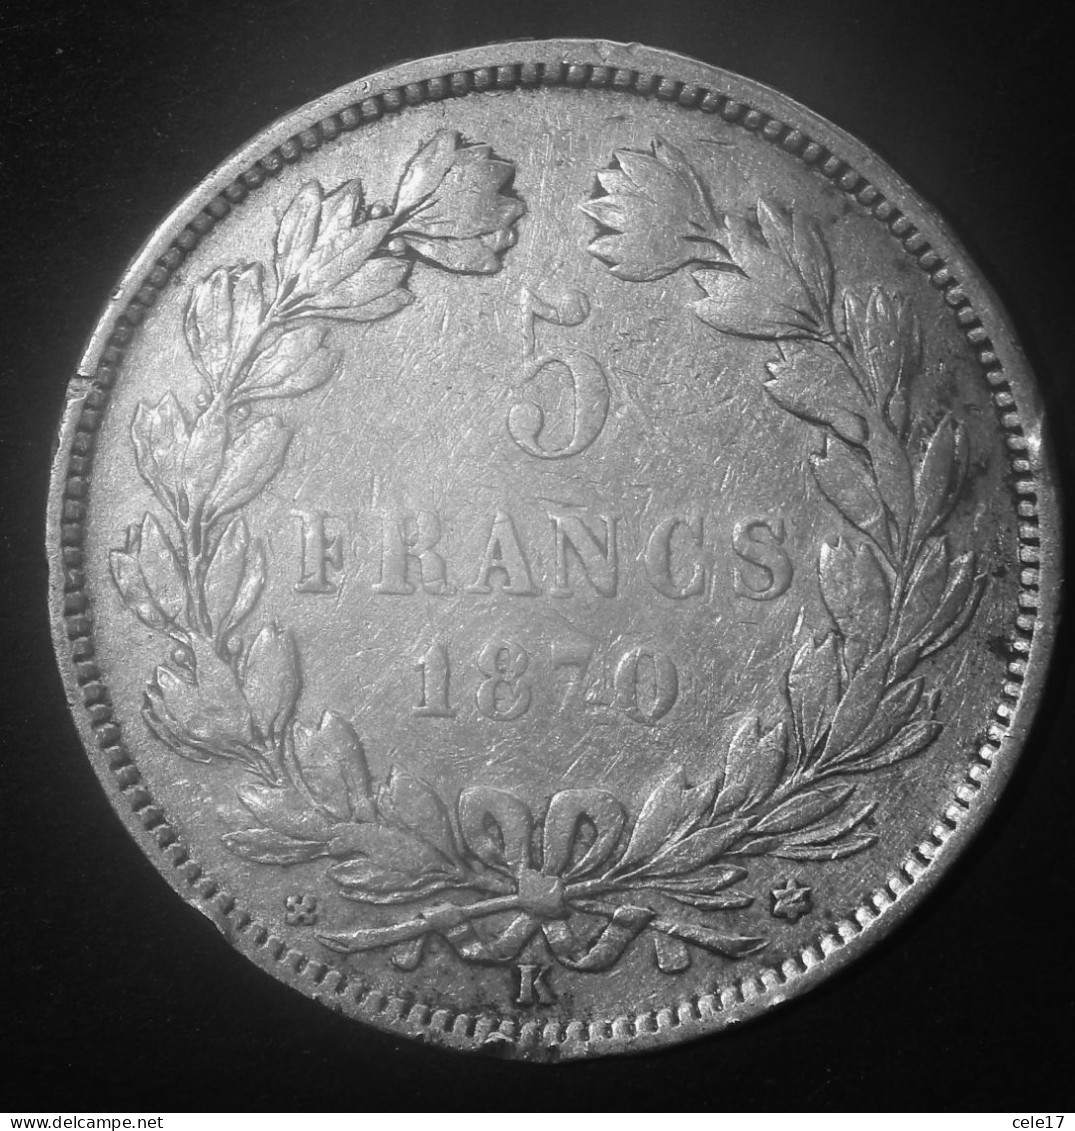 FRANCIA- CERES 5 FRANCHI 1870 ARGENTO- M/star- KM812.2 - 1870-1871 Gobierno De Defensa Nacional